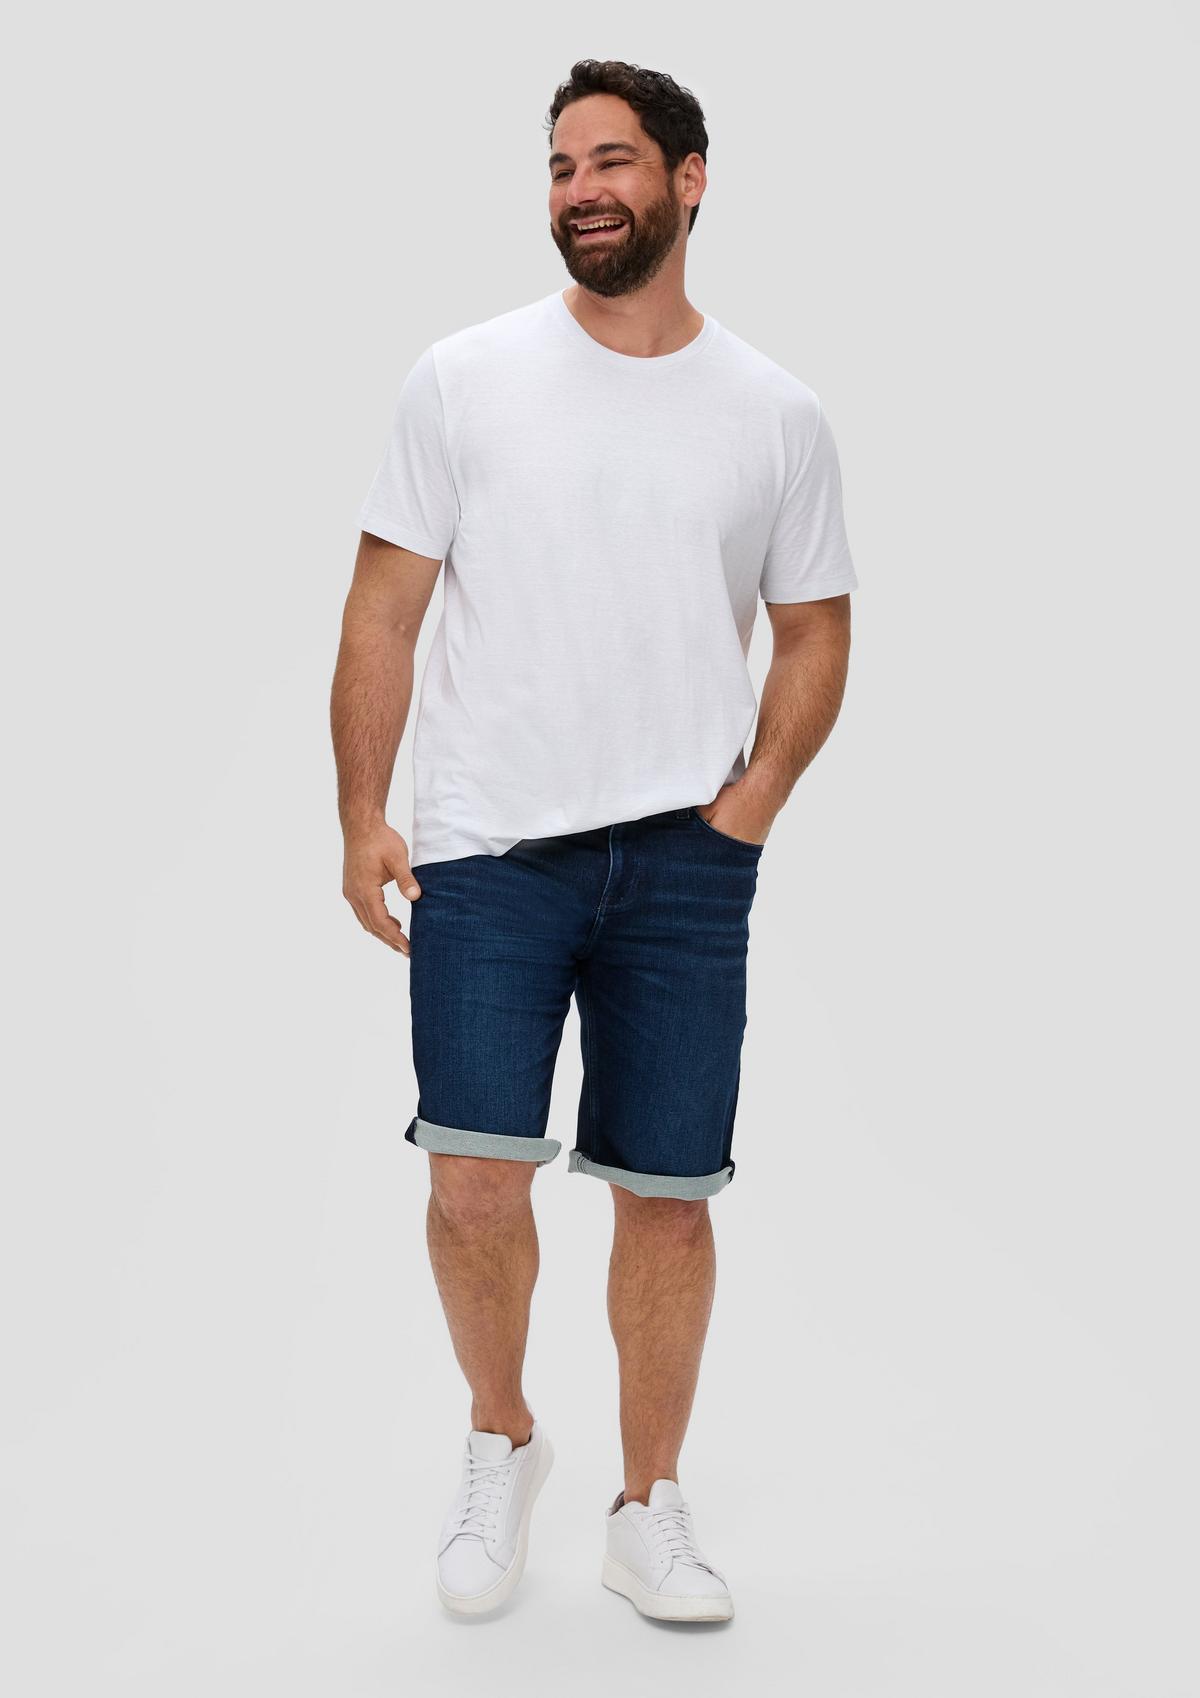 Bermuda-jeans Mauro / regular fit / high rise / straight leg